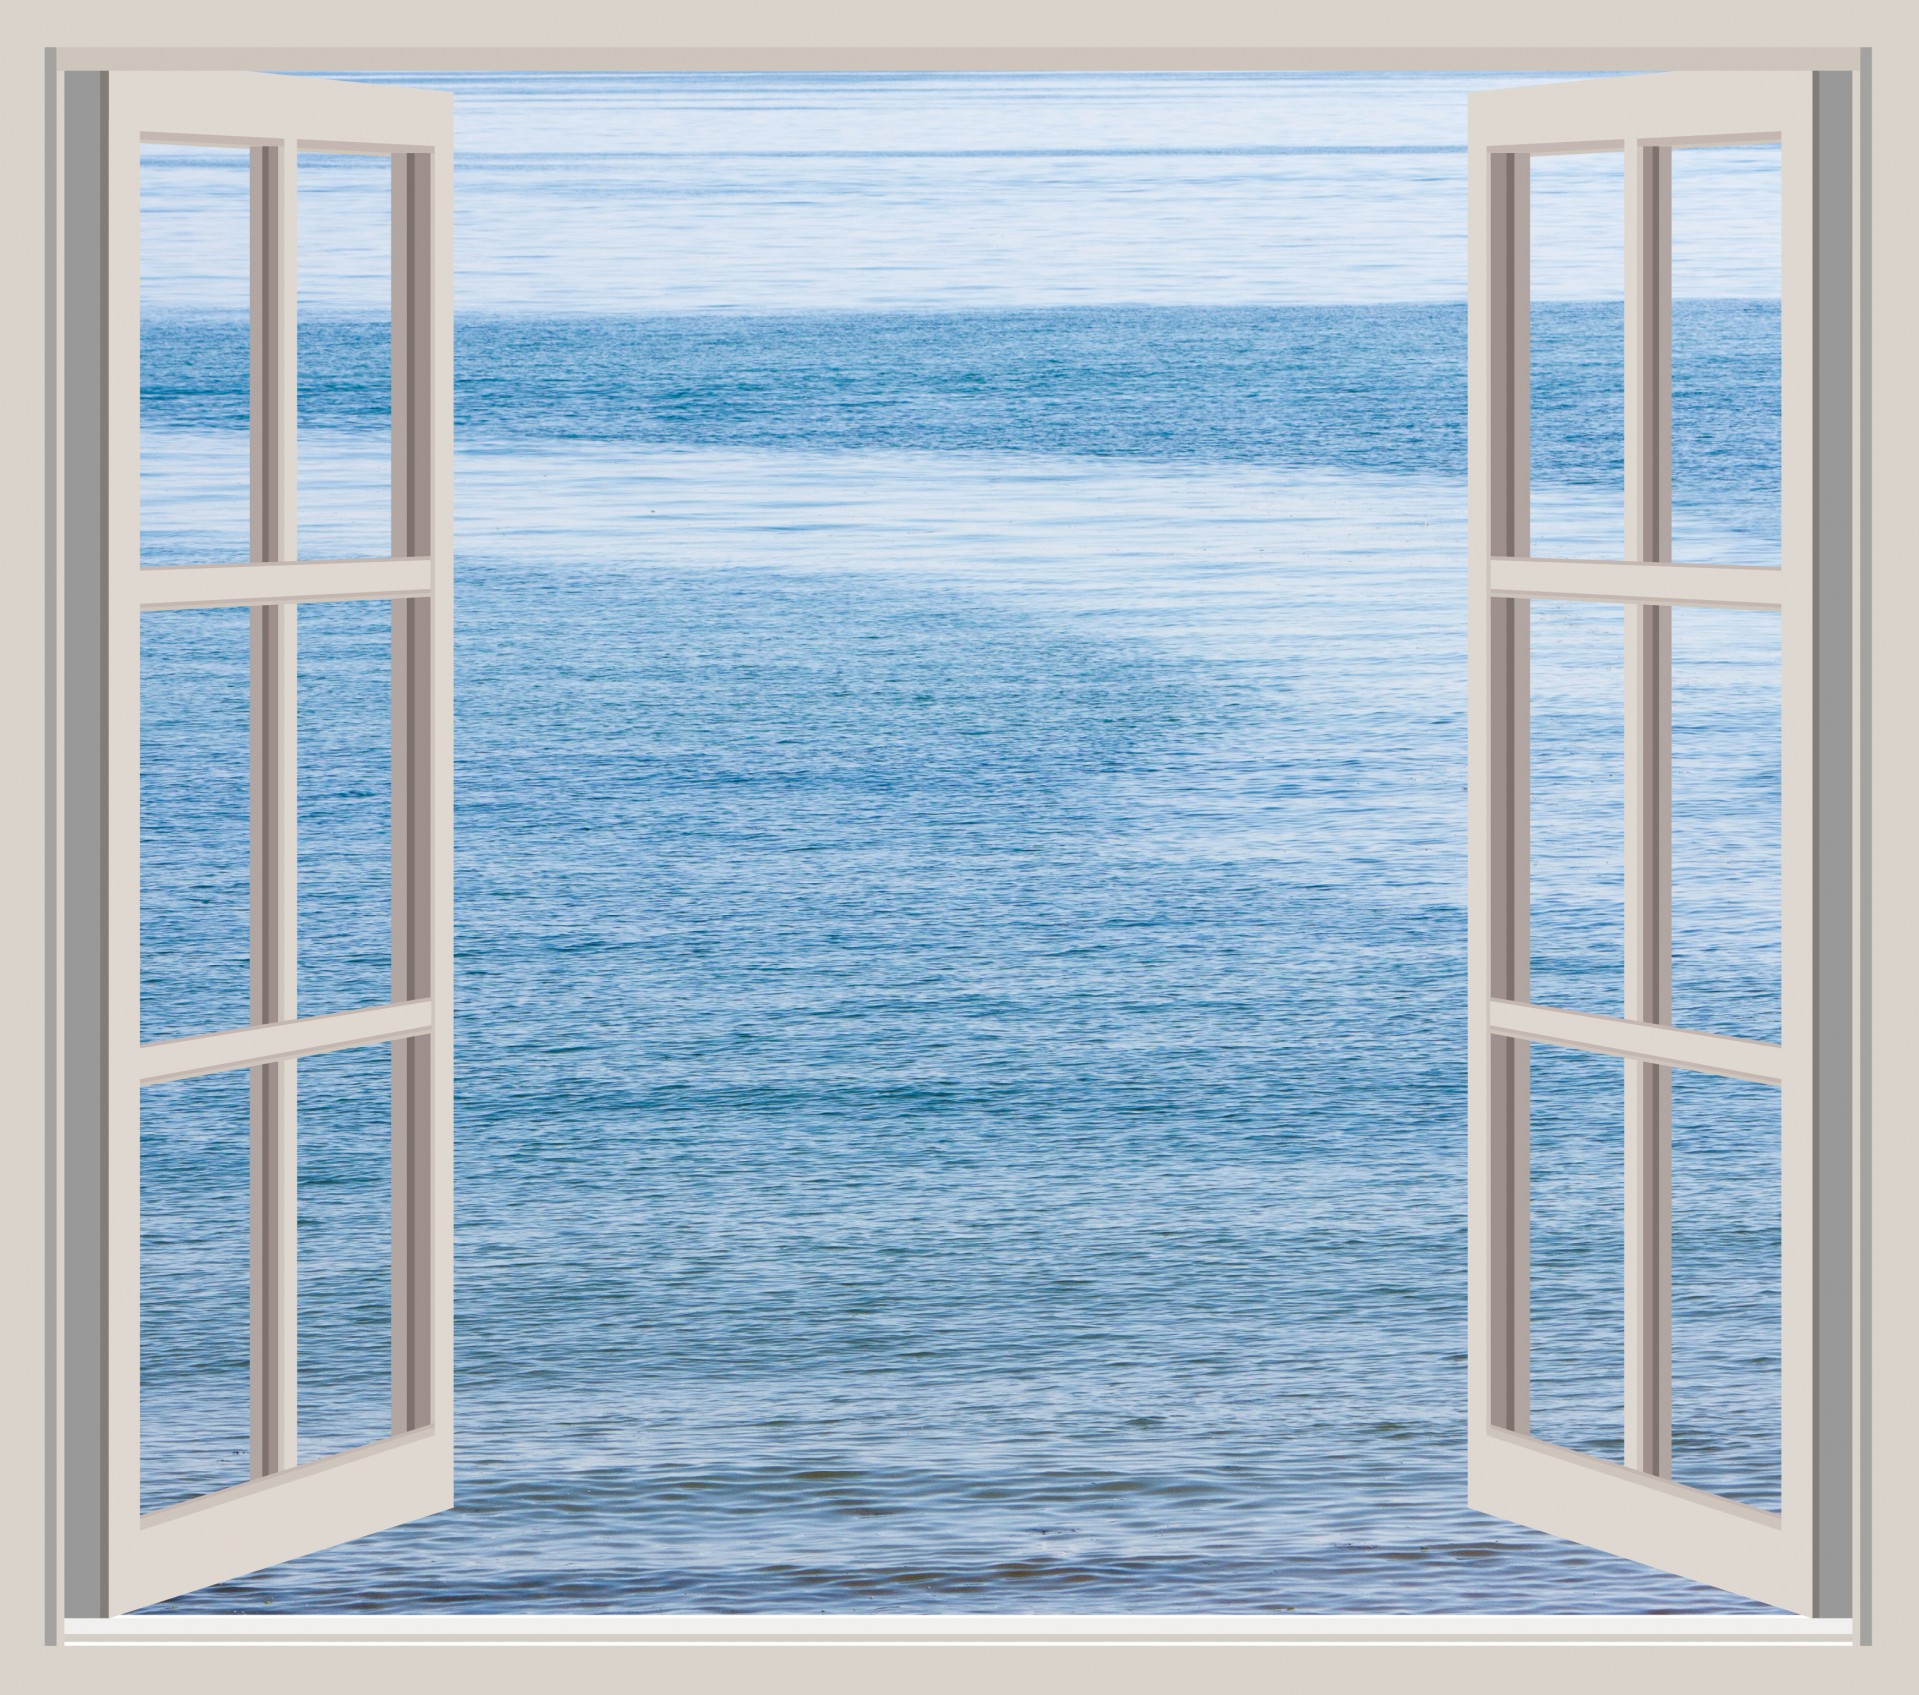 Ocean Through Window Frame